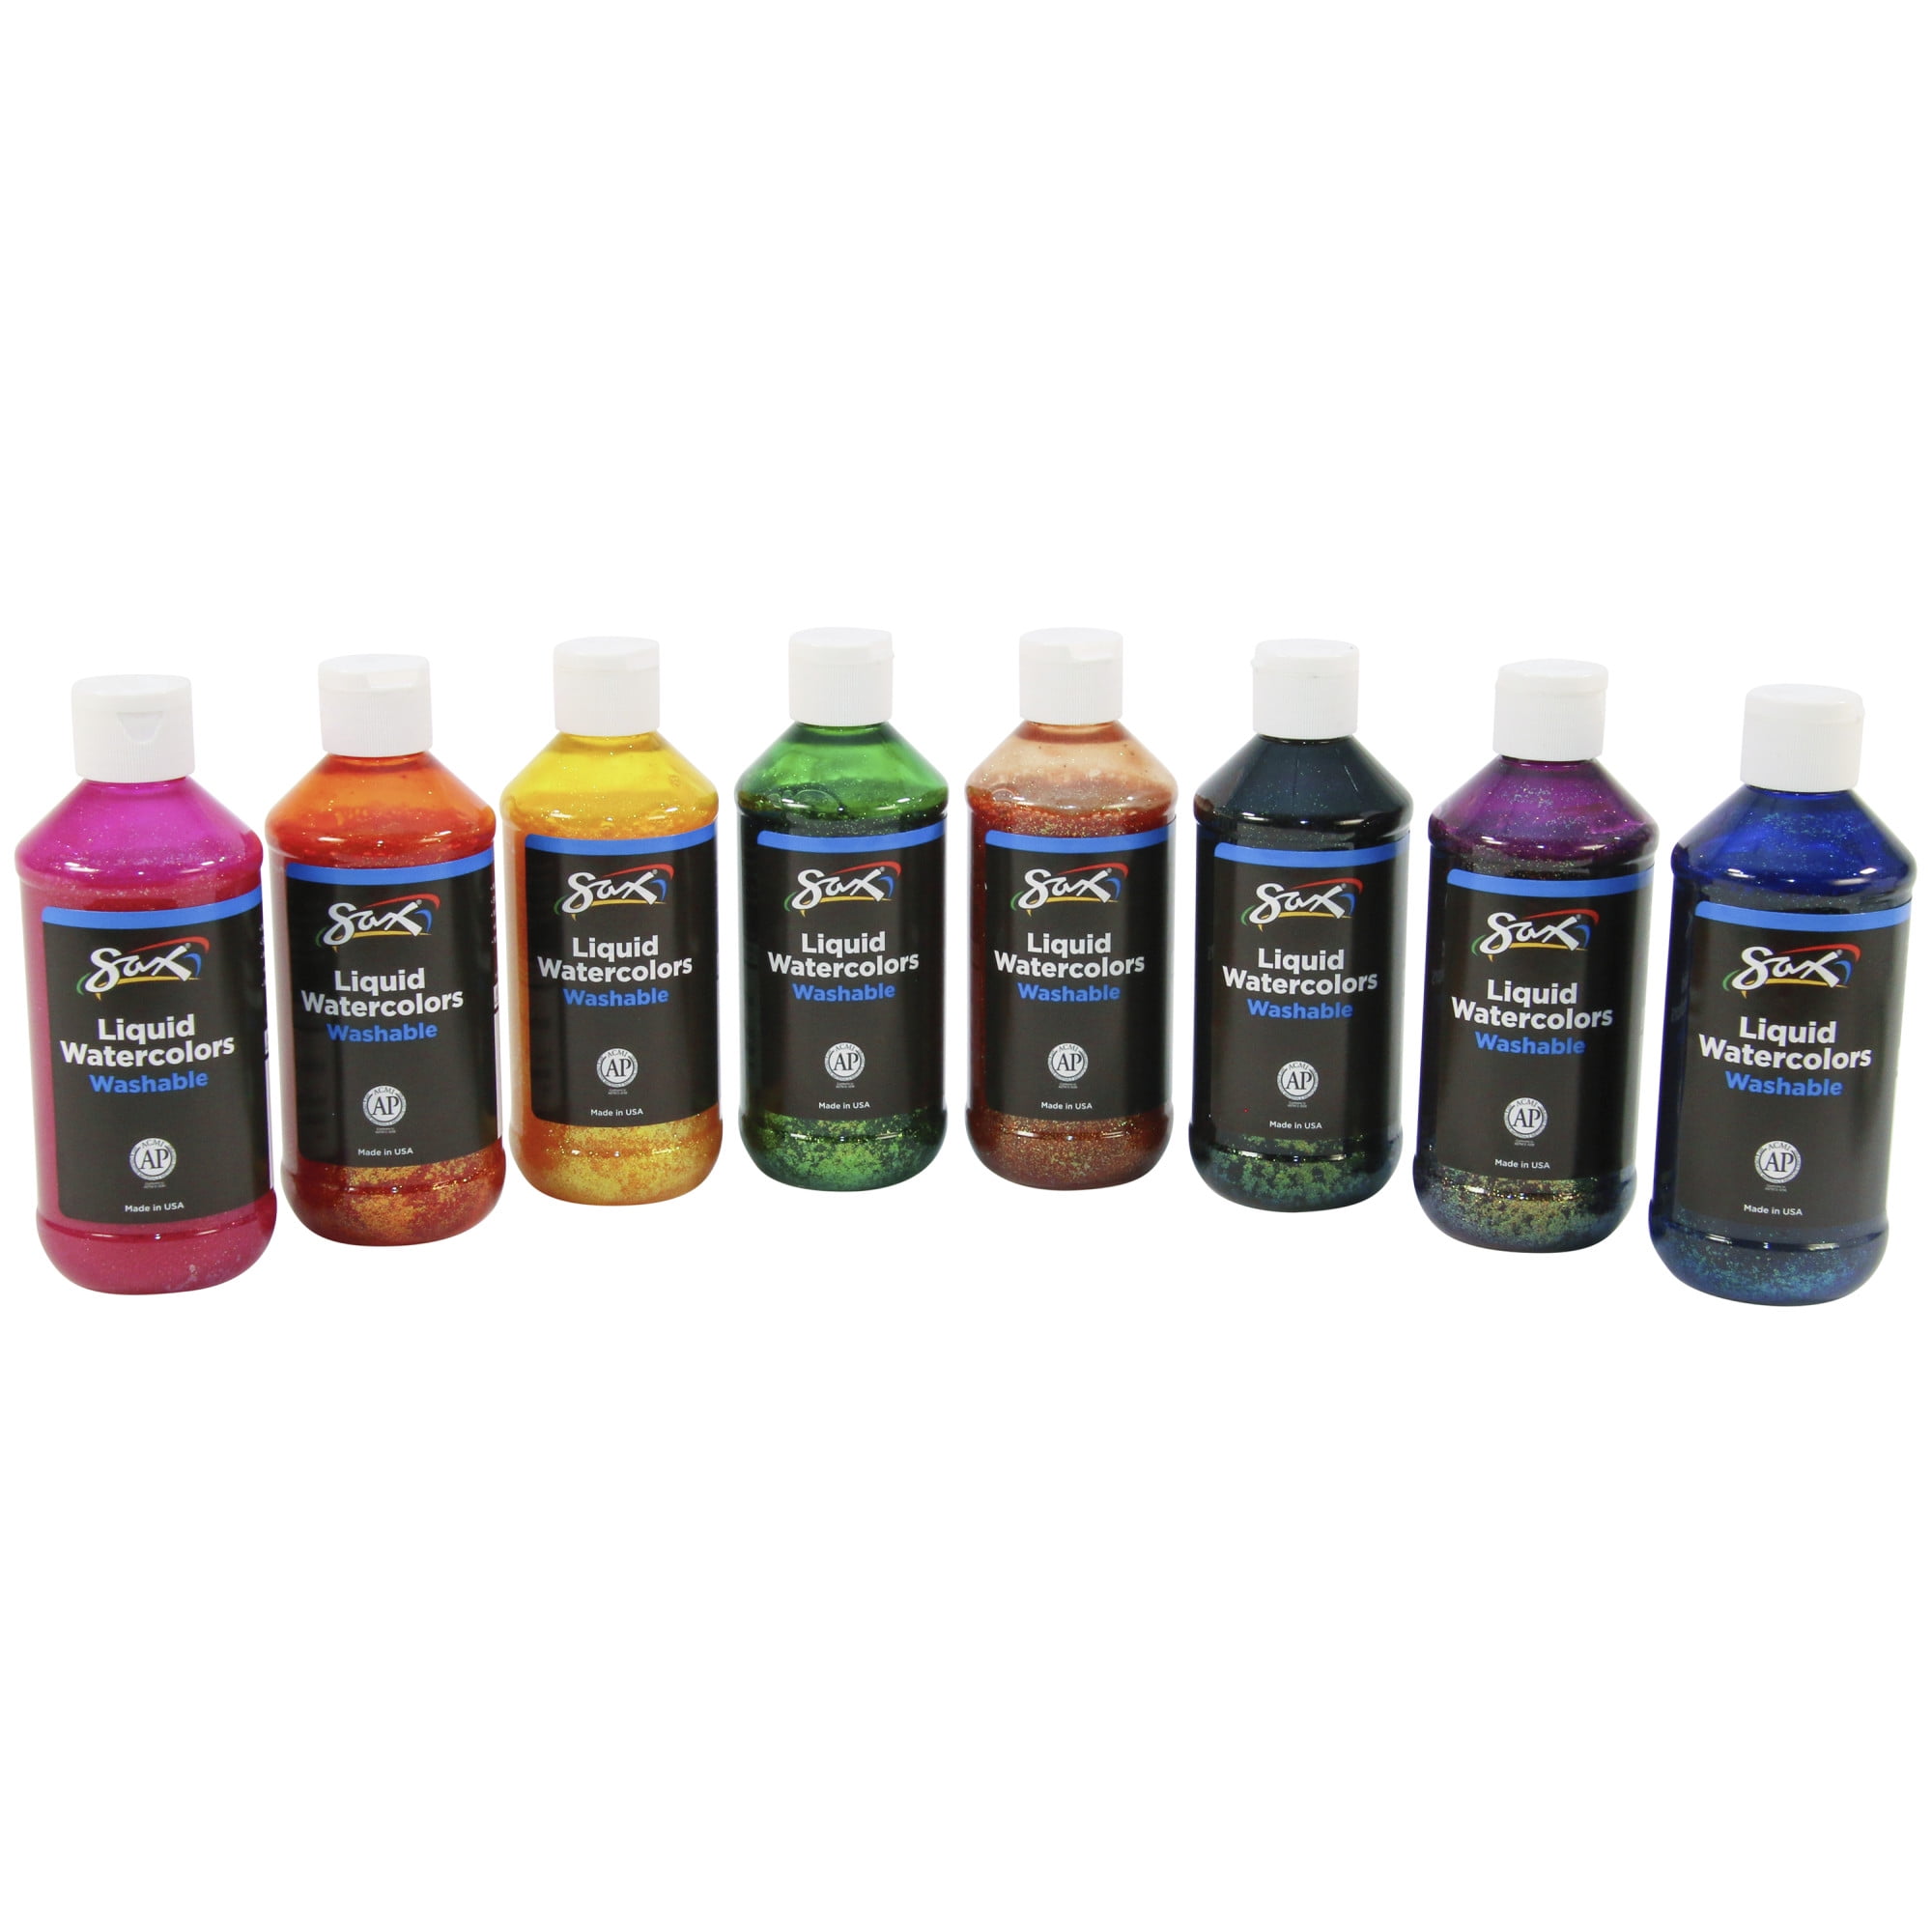 Sax 1567858 8 oz Washable Liquid Watercolor Paint, Assorted Colors - Set of 8